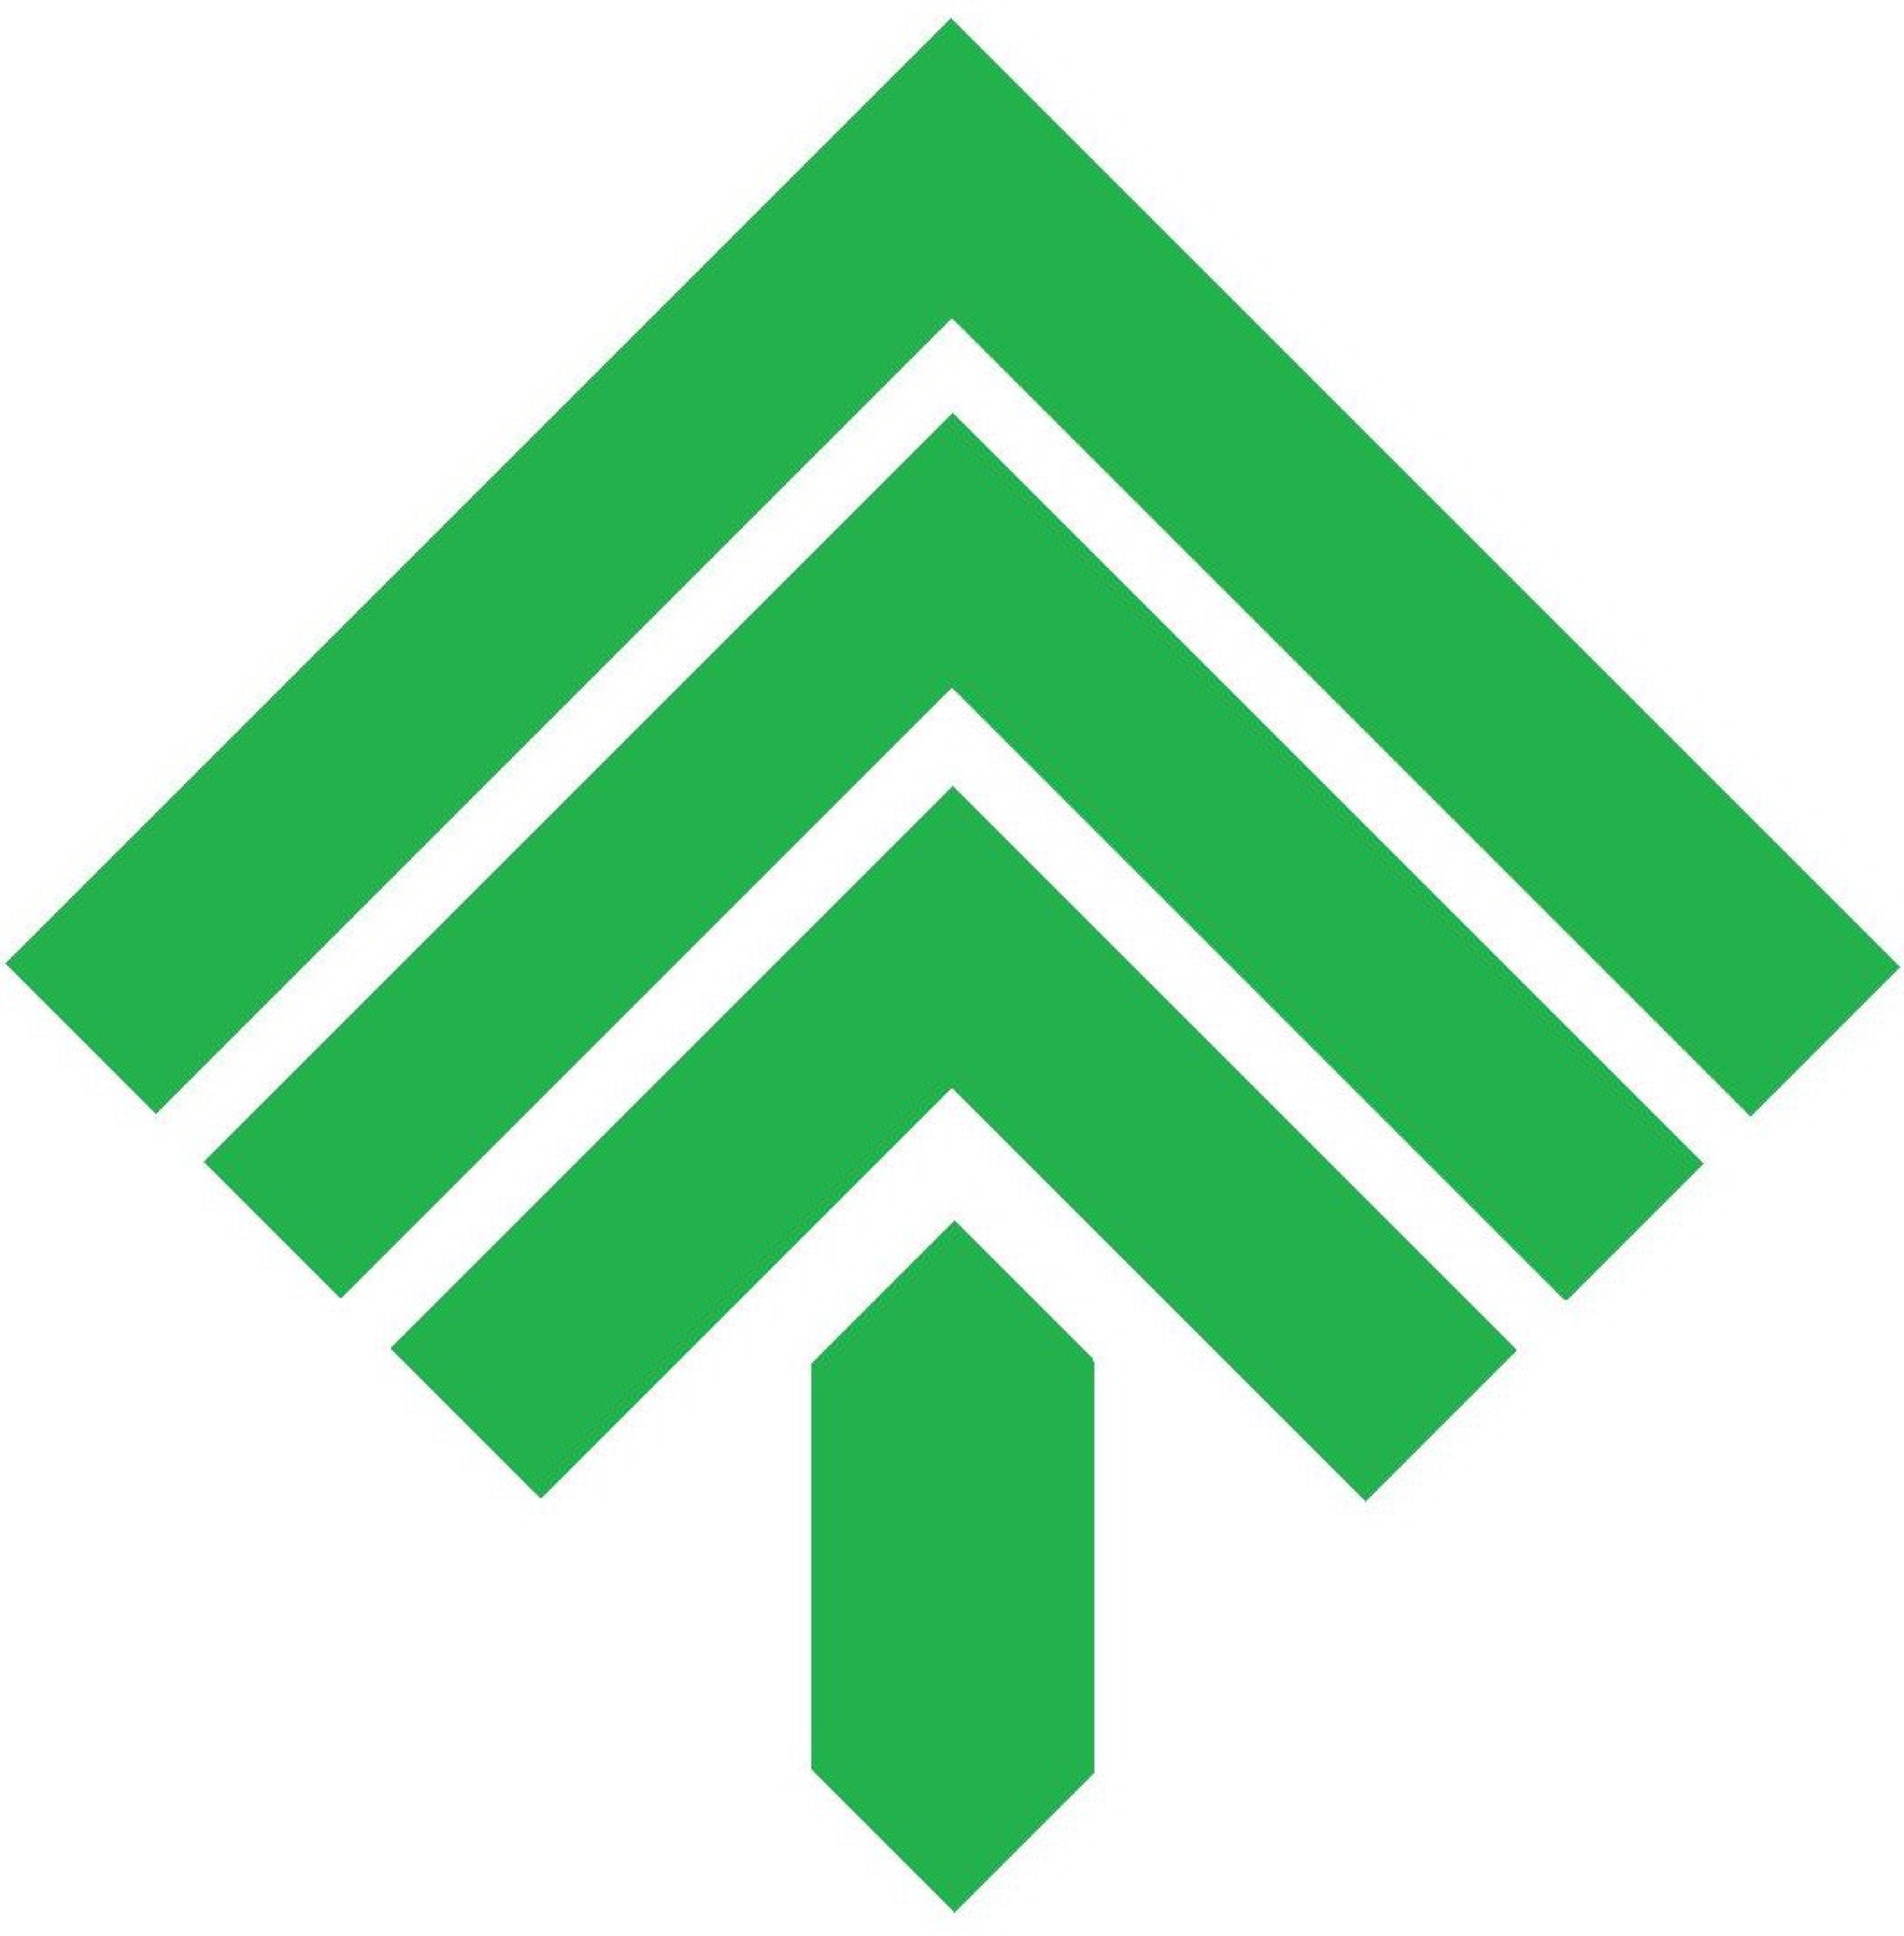 Trees Unlimited, Inc. Logo